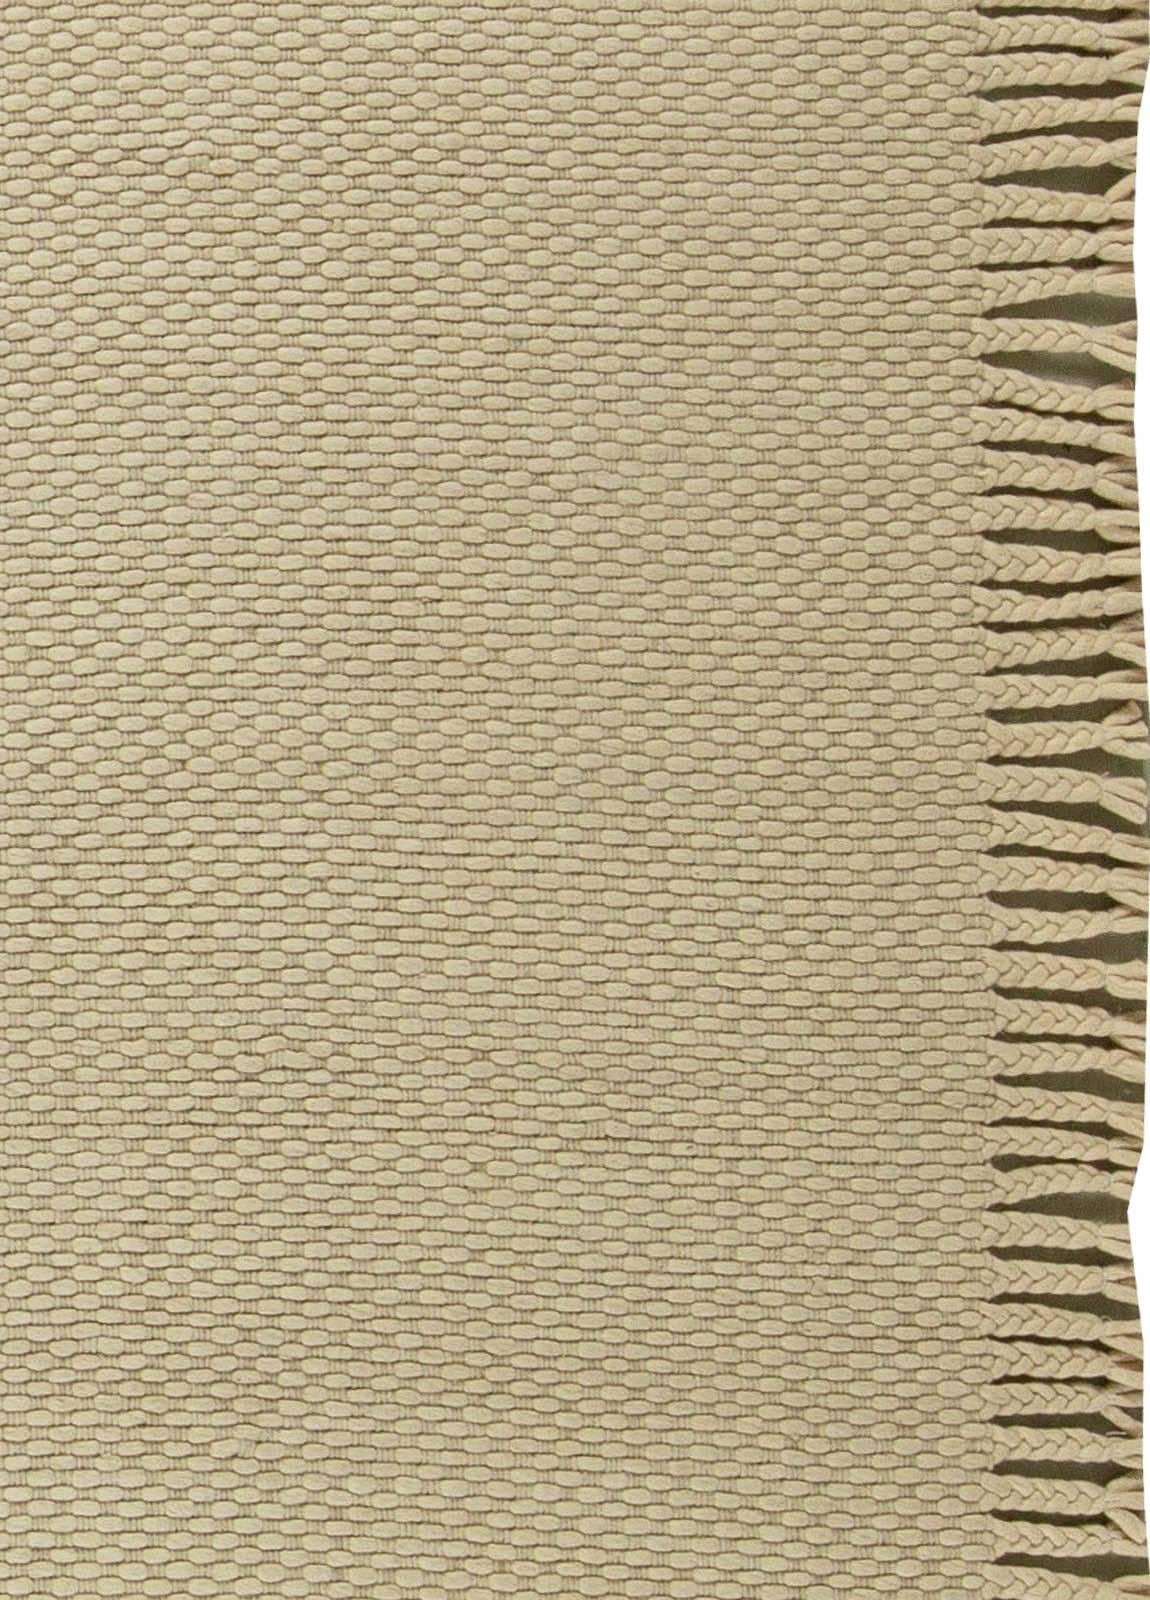 Indian Contemporary Beige Flat-Weave Wool Rug by Doris Leslie Blau For Sale